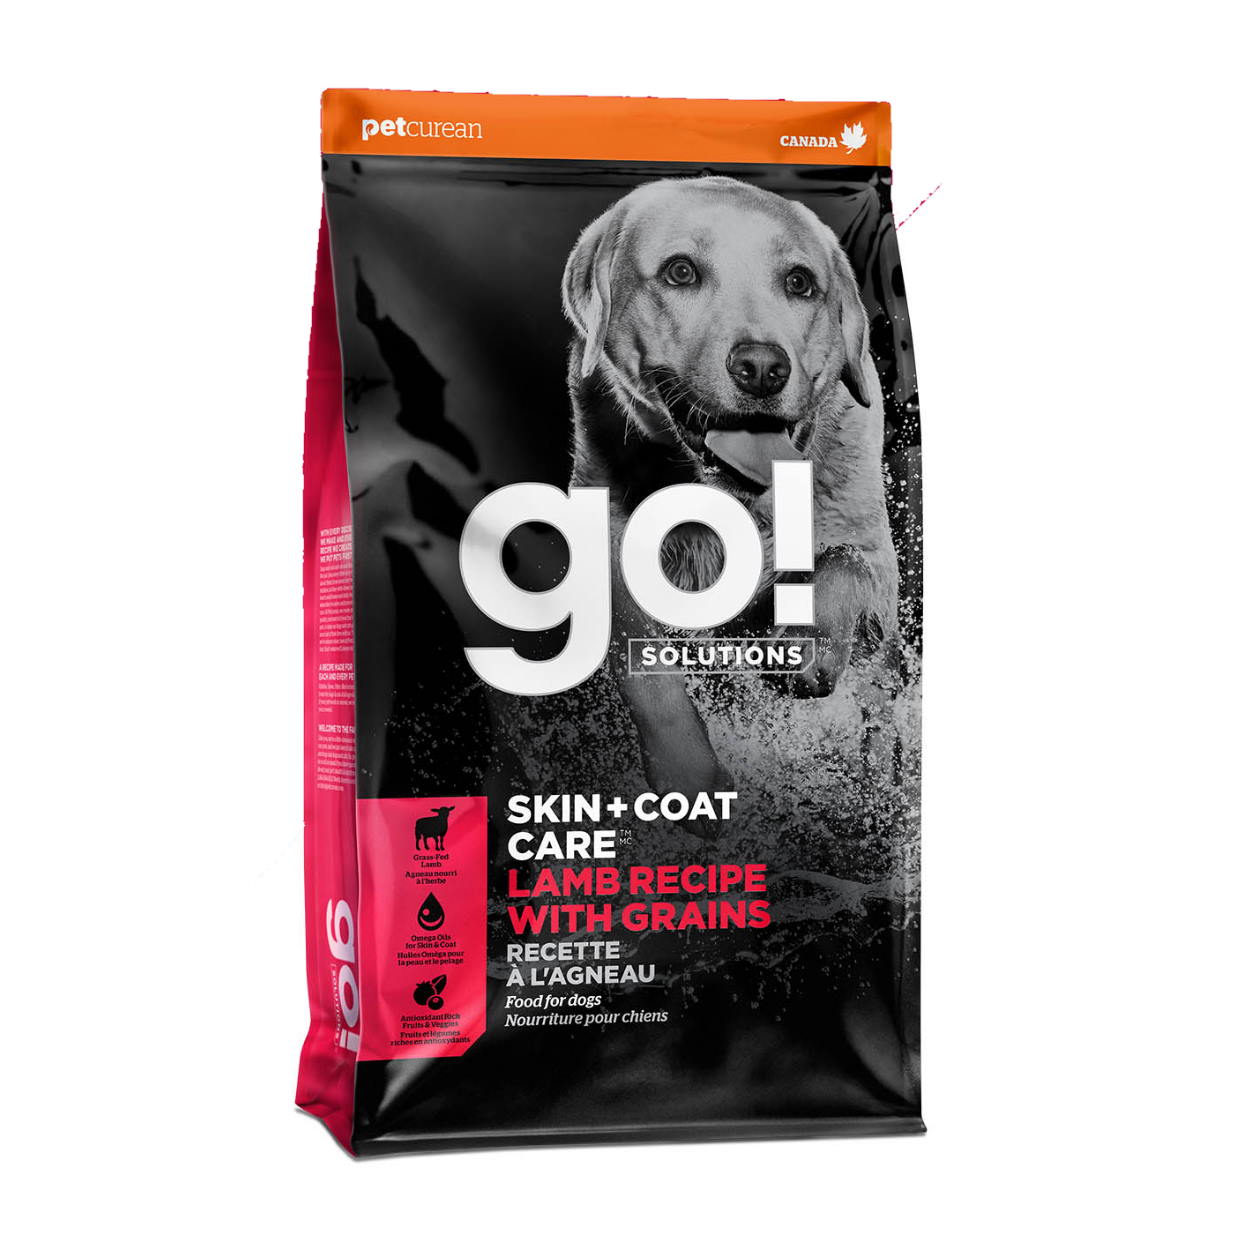 Go! Solutions Skin + Coat Care Lamb Recipe with Grains Dry Dog Food, 3.5-lb Bag